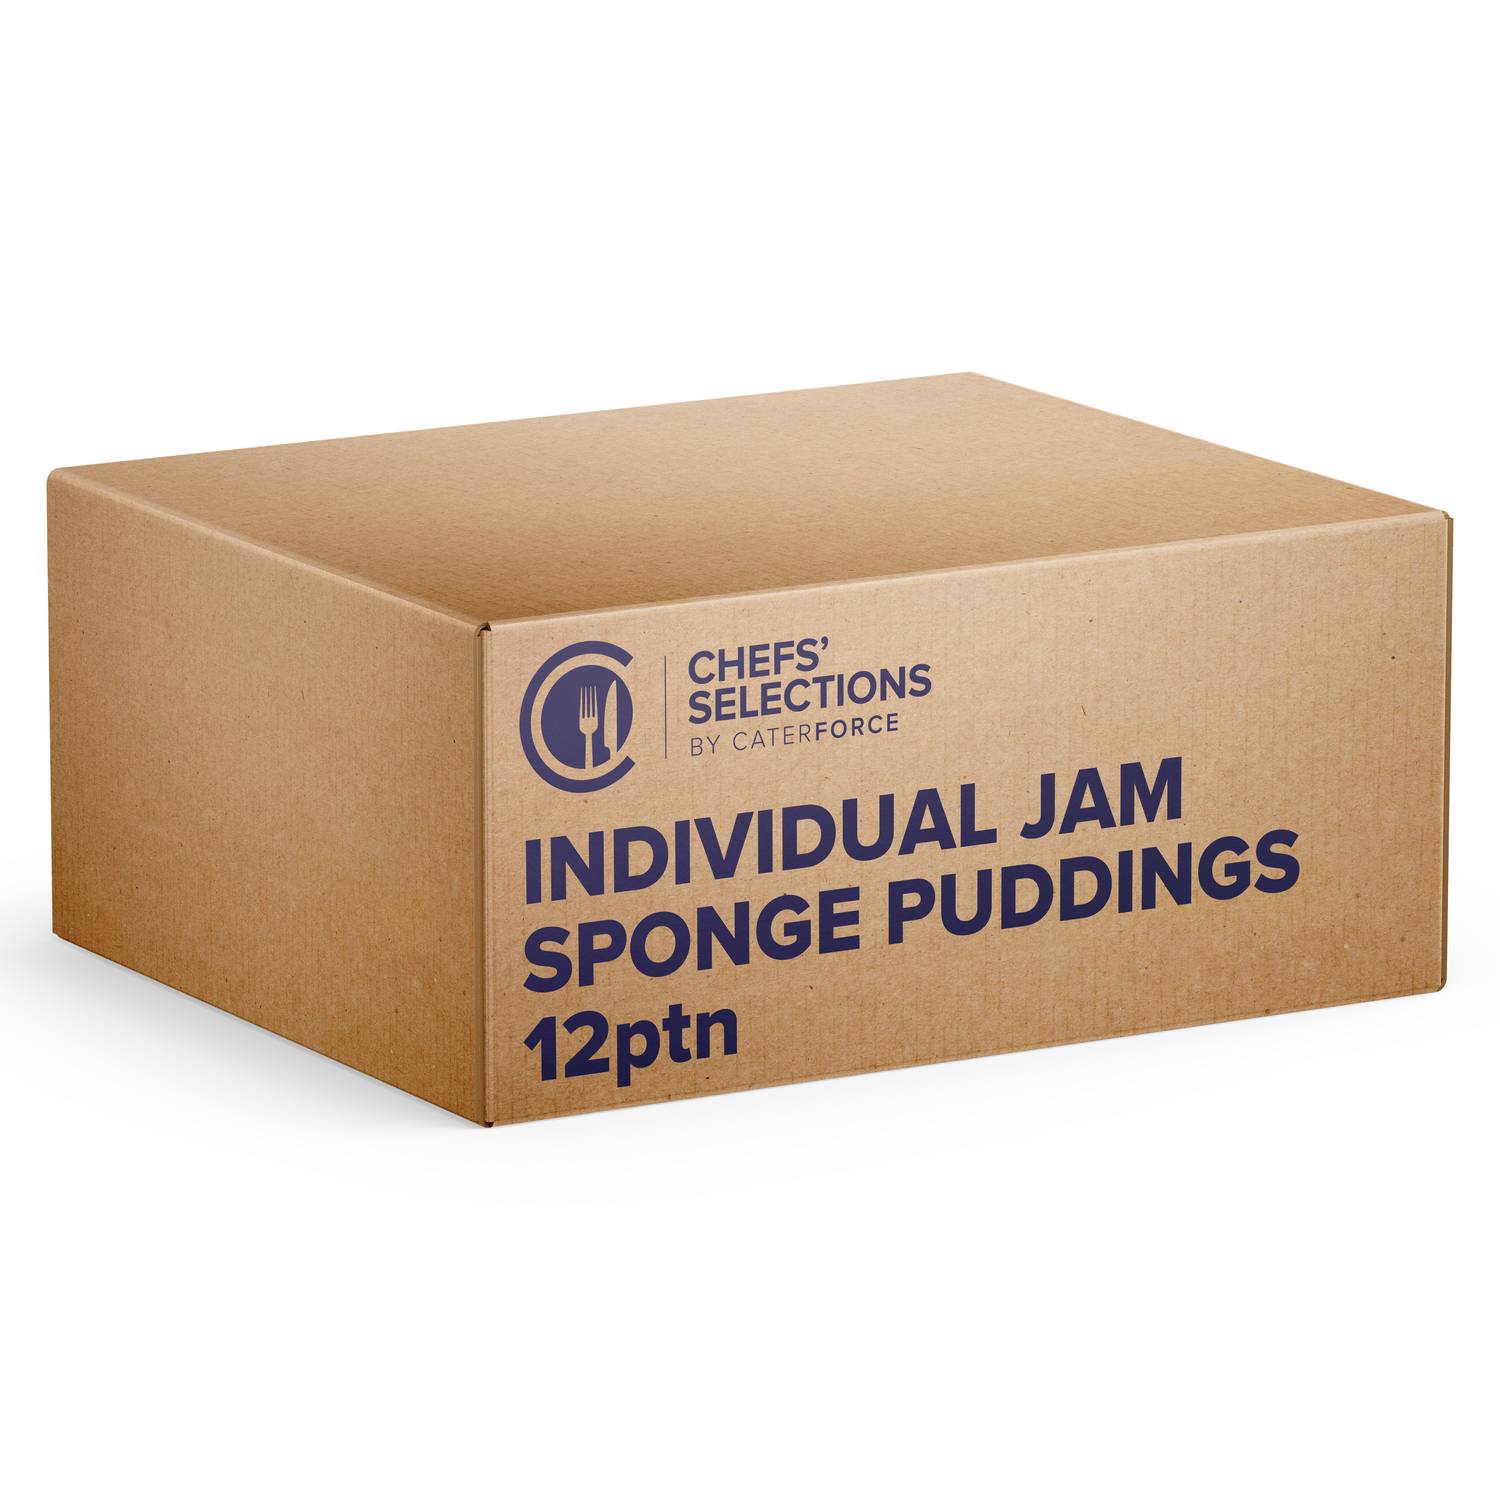 Chefs’ Selections Individual Jam Sponge Puddings (1 x 12)